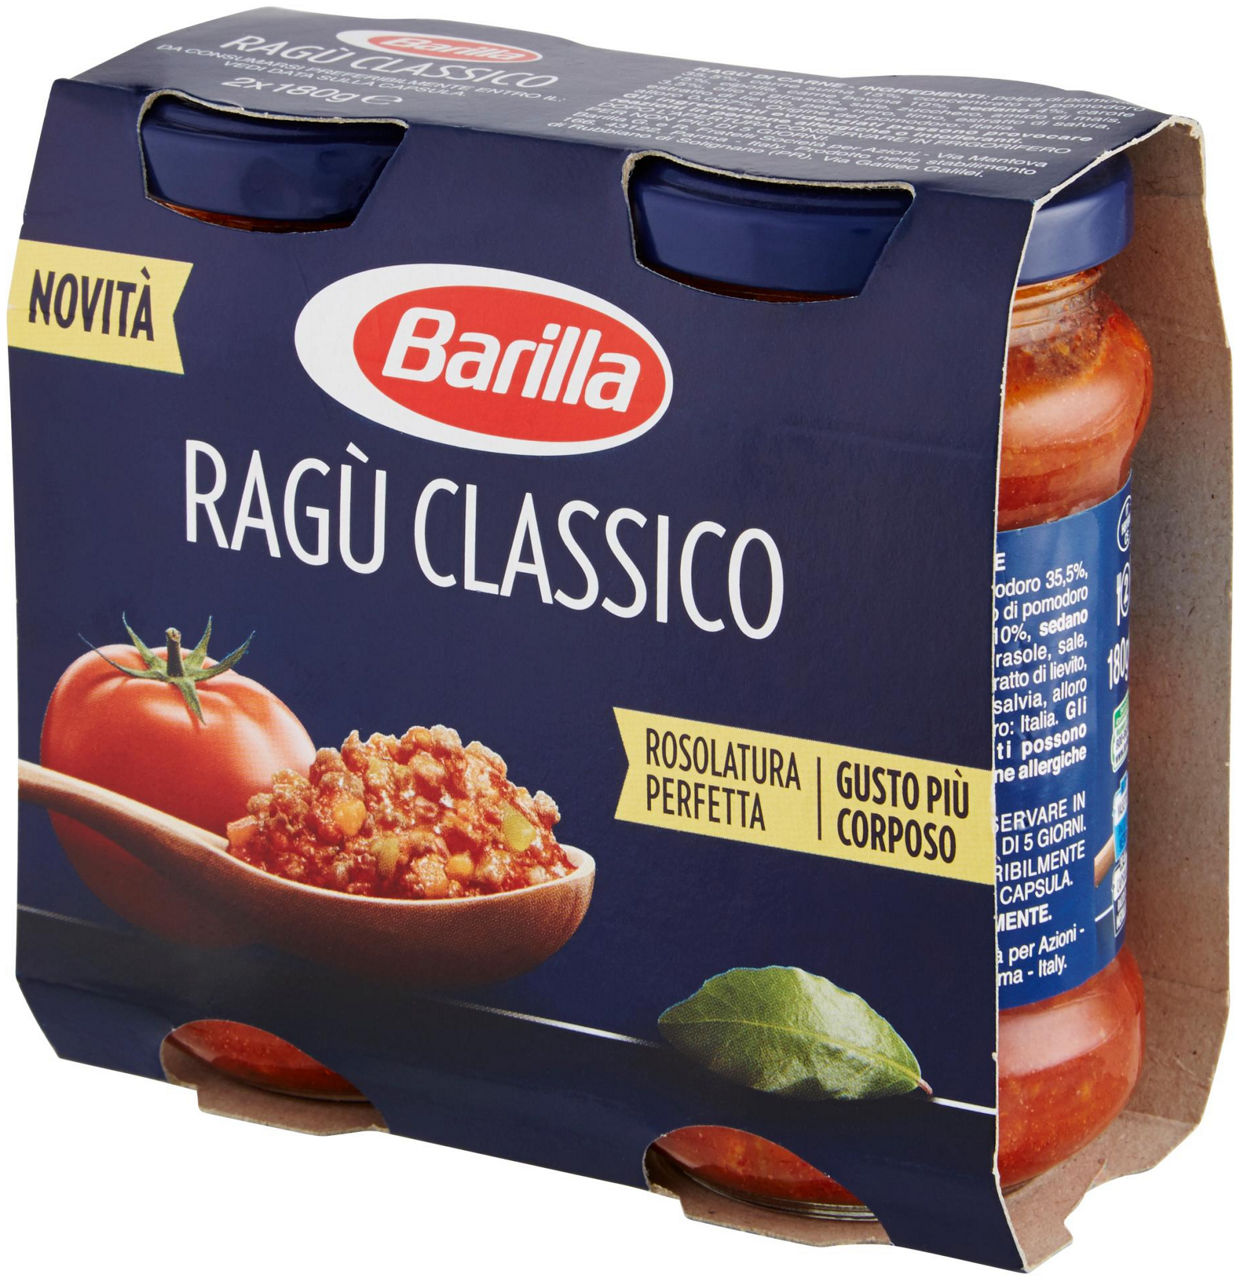 RAGU' CLASSICO BARILLA CLUSTER VASO VETRO G 180 X 2 - 12